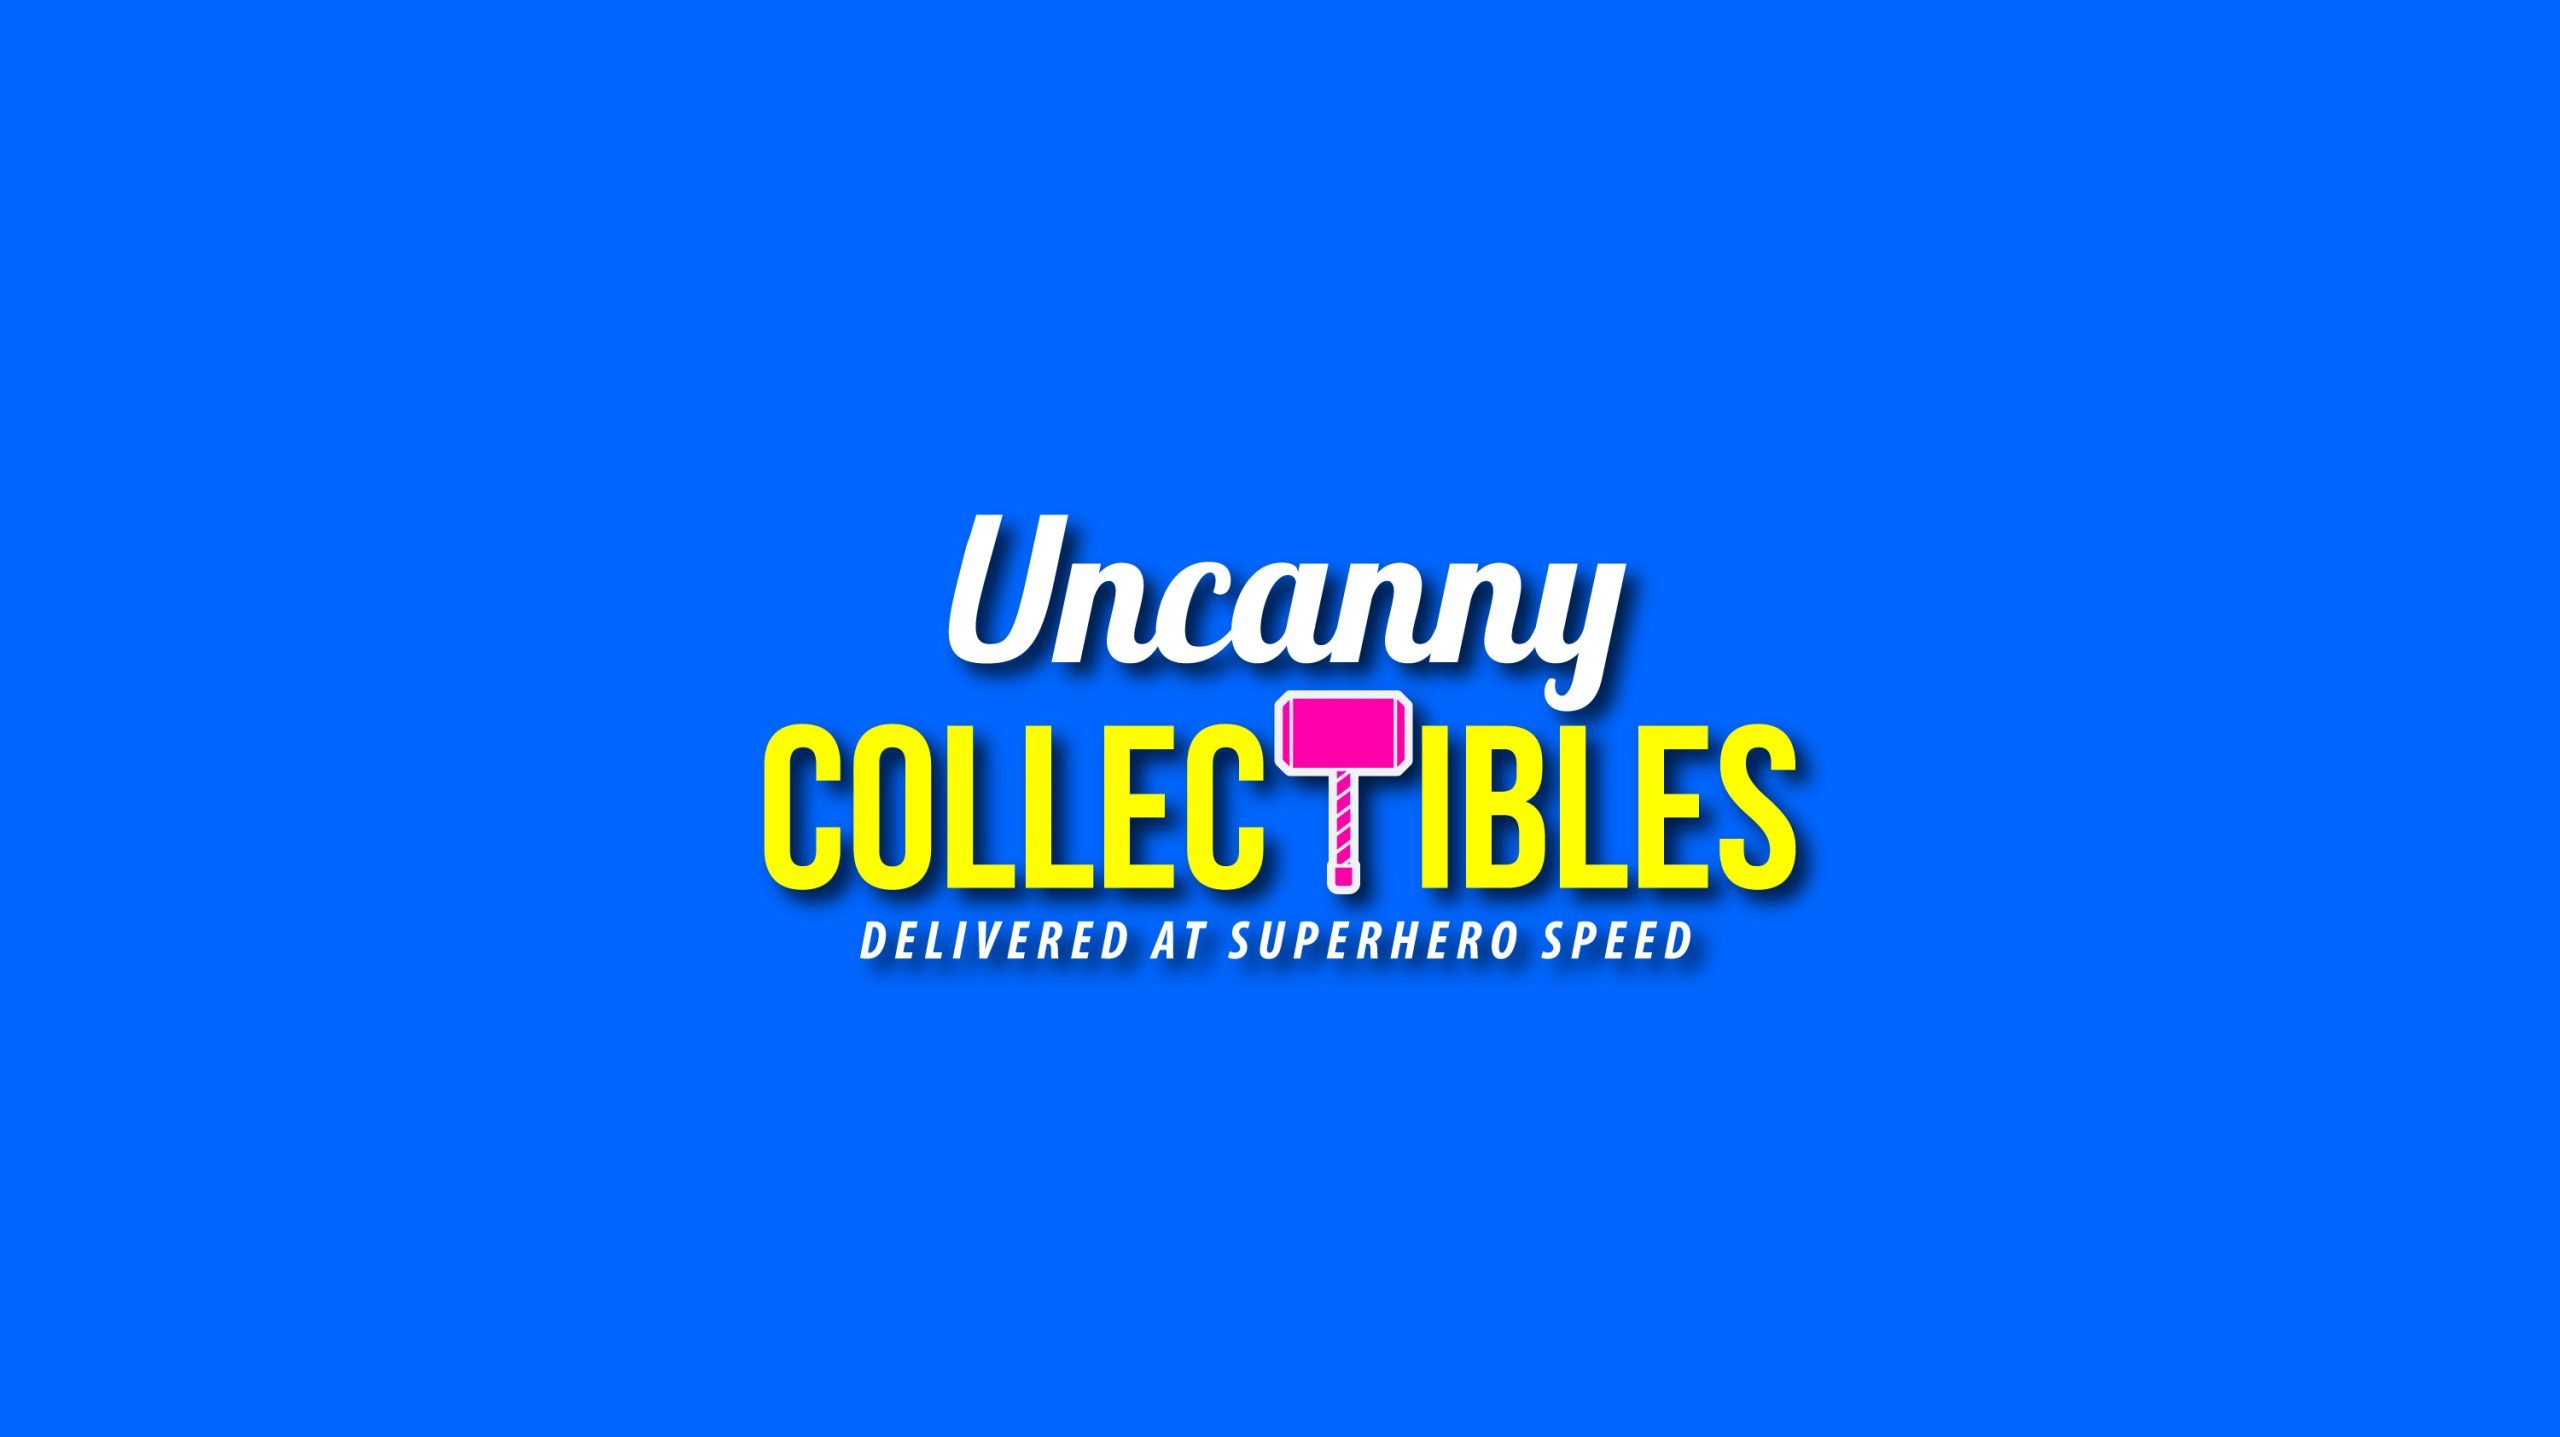 Uncanny Collectibles